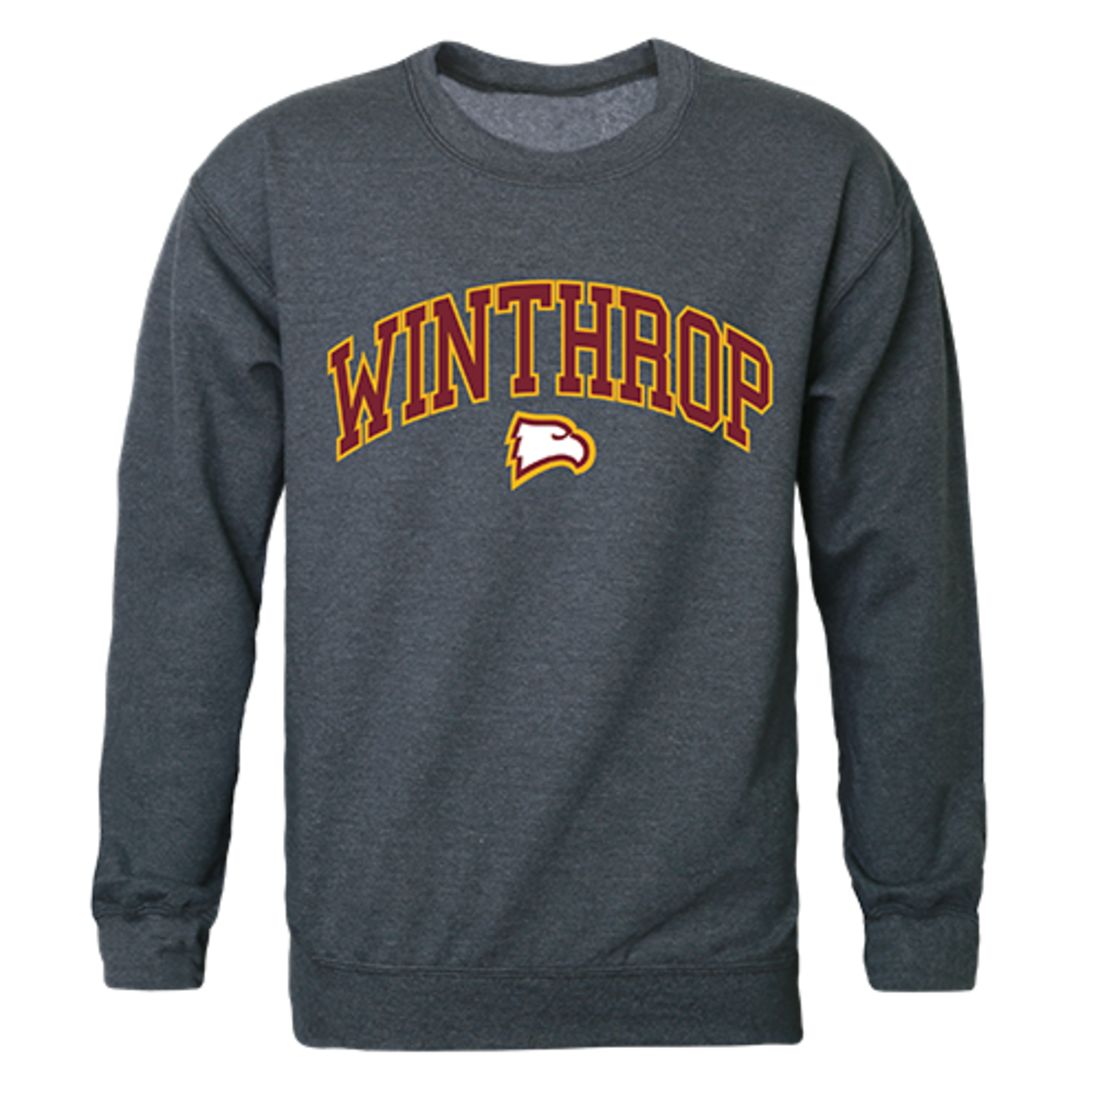 Winthrop University Campus Crewneck Pullover Sweatshirt Sweater Heather Charcoal-Campus-Wardrobe